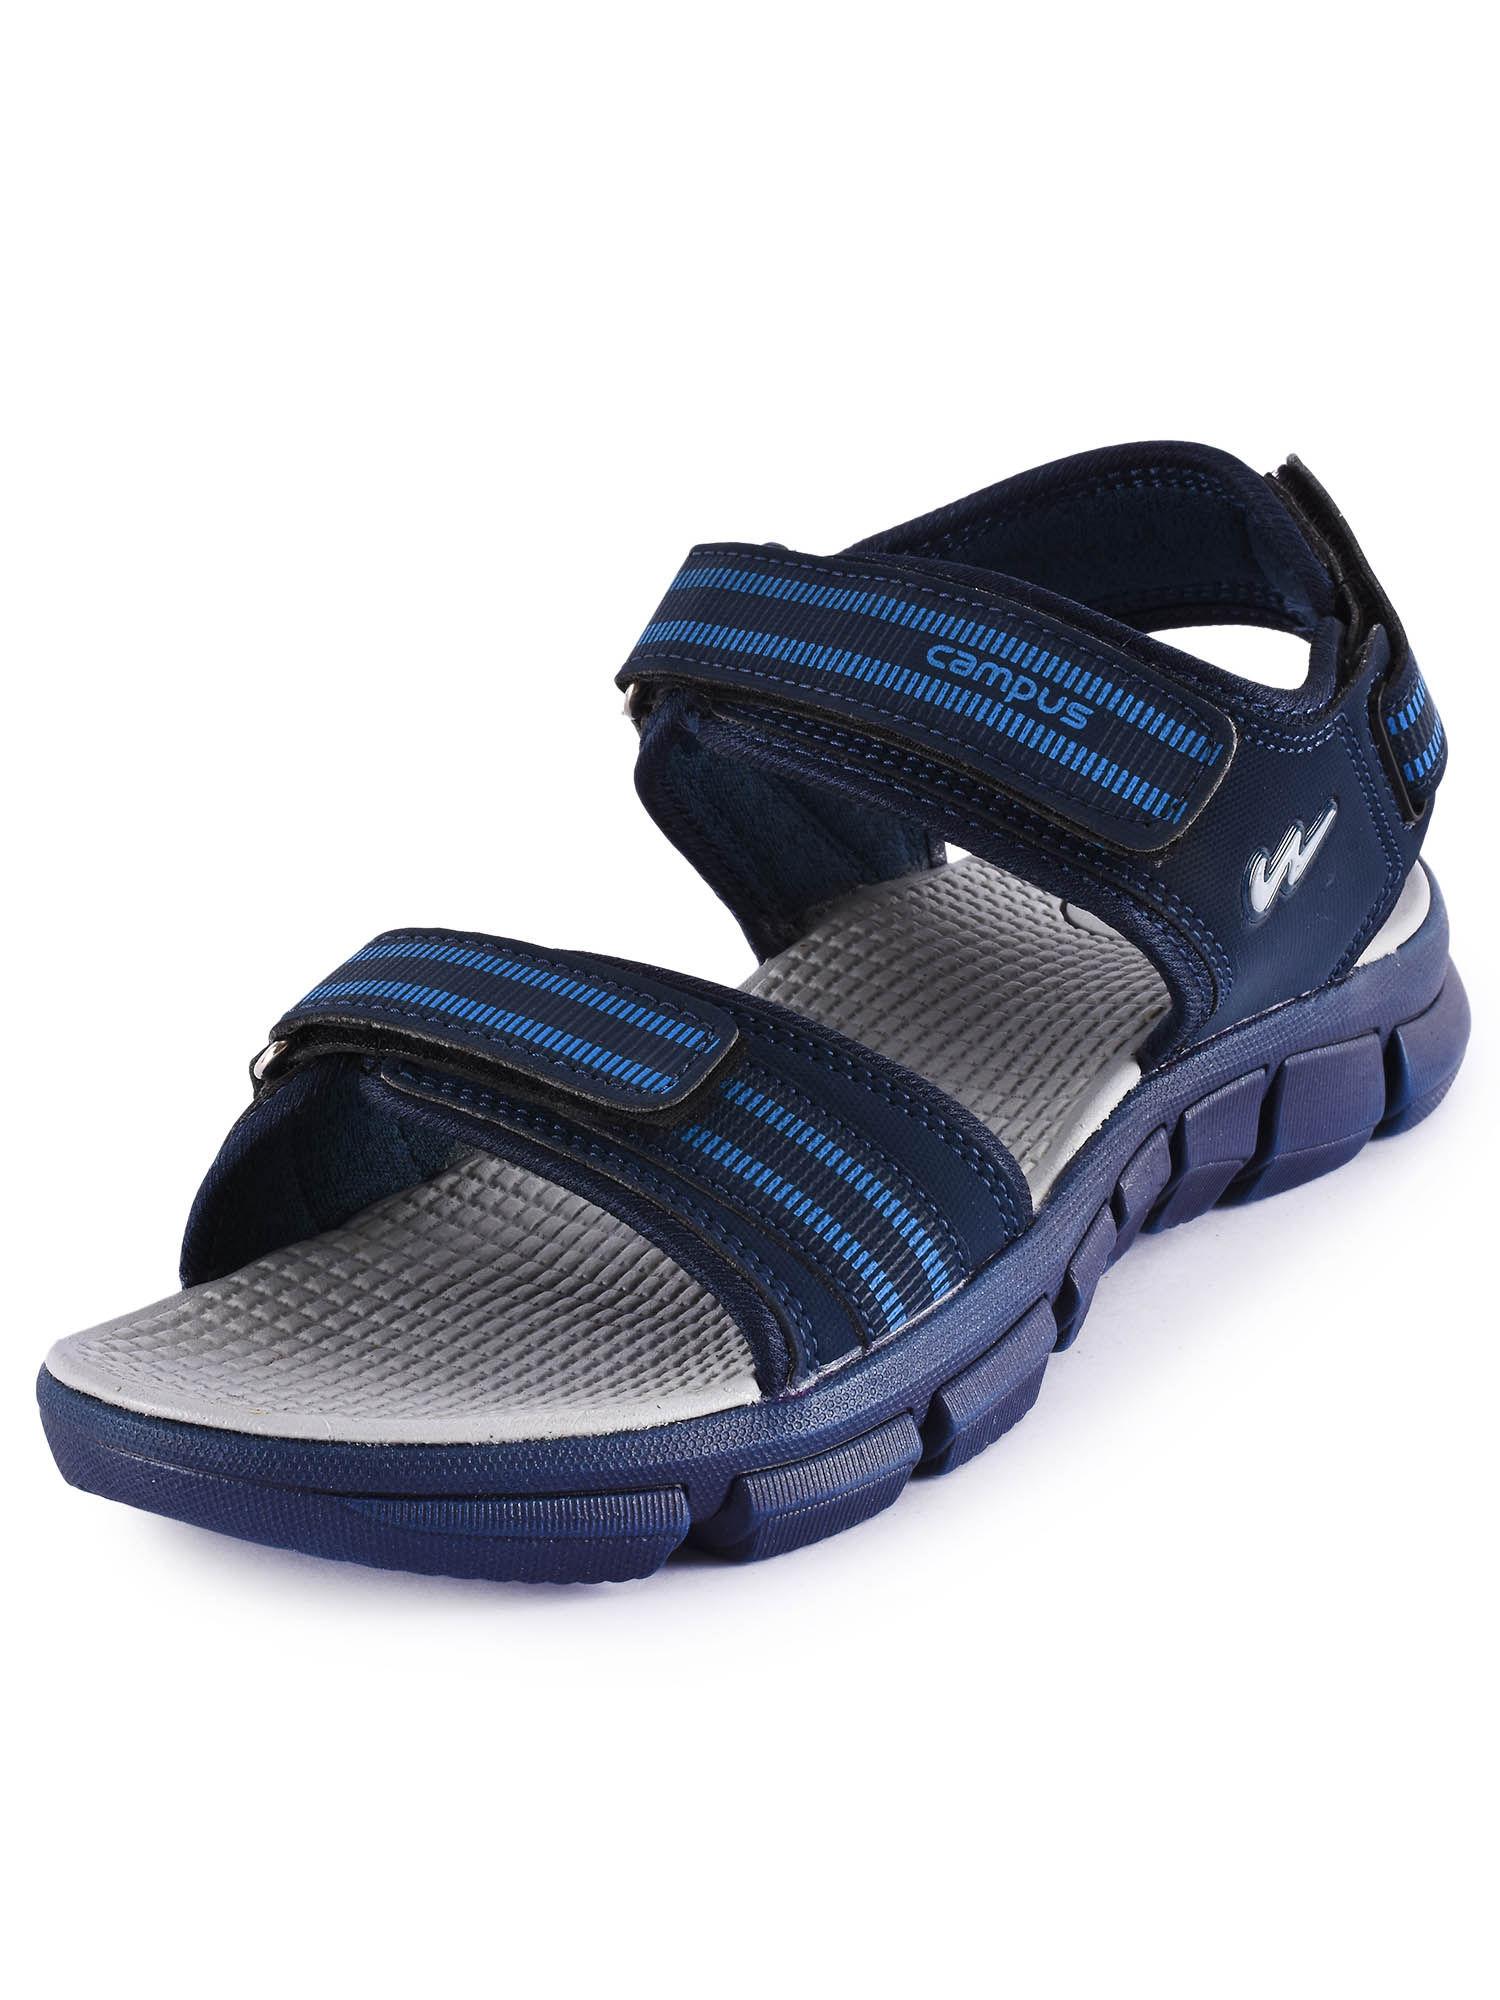 Sd-Pf029 Blue Sandals For Men